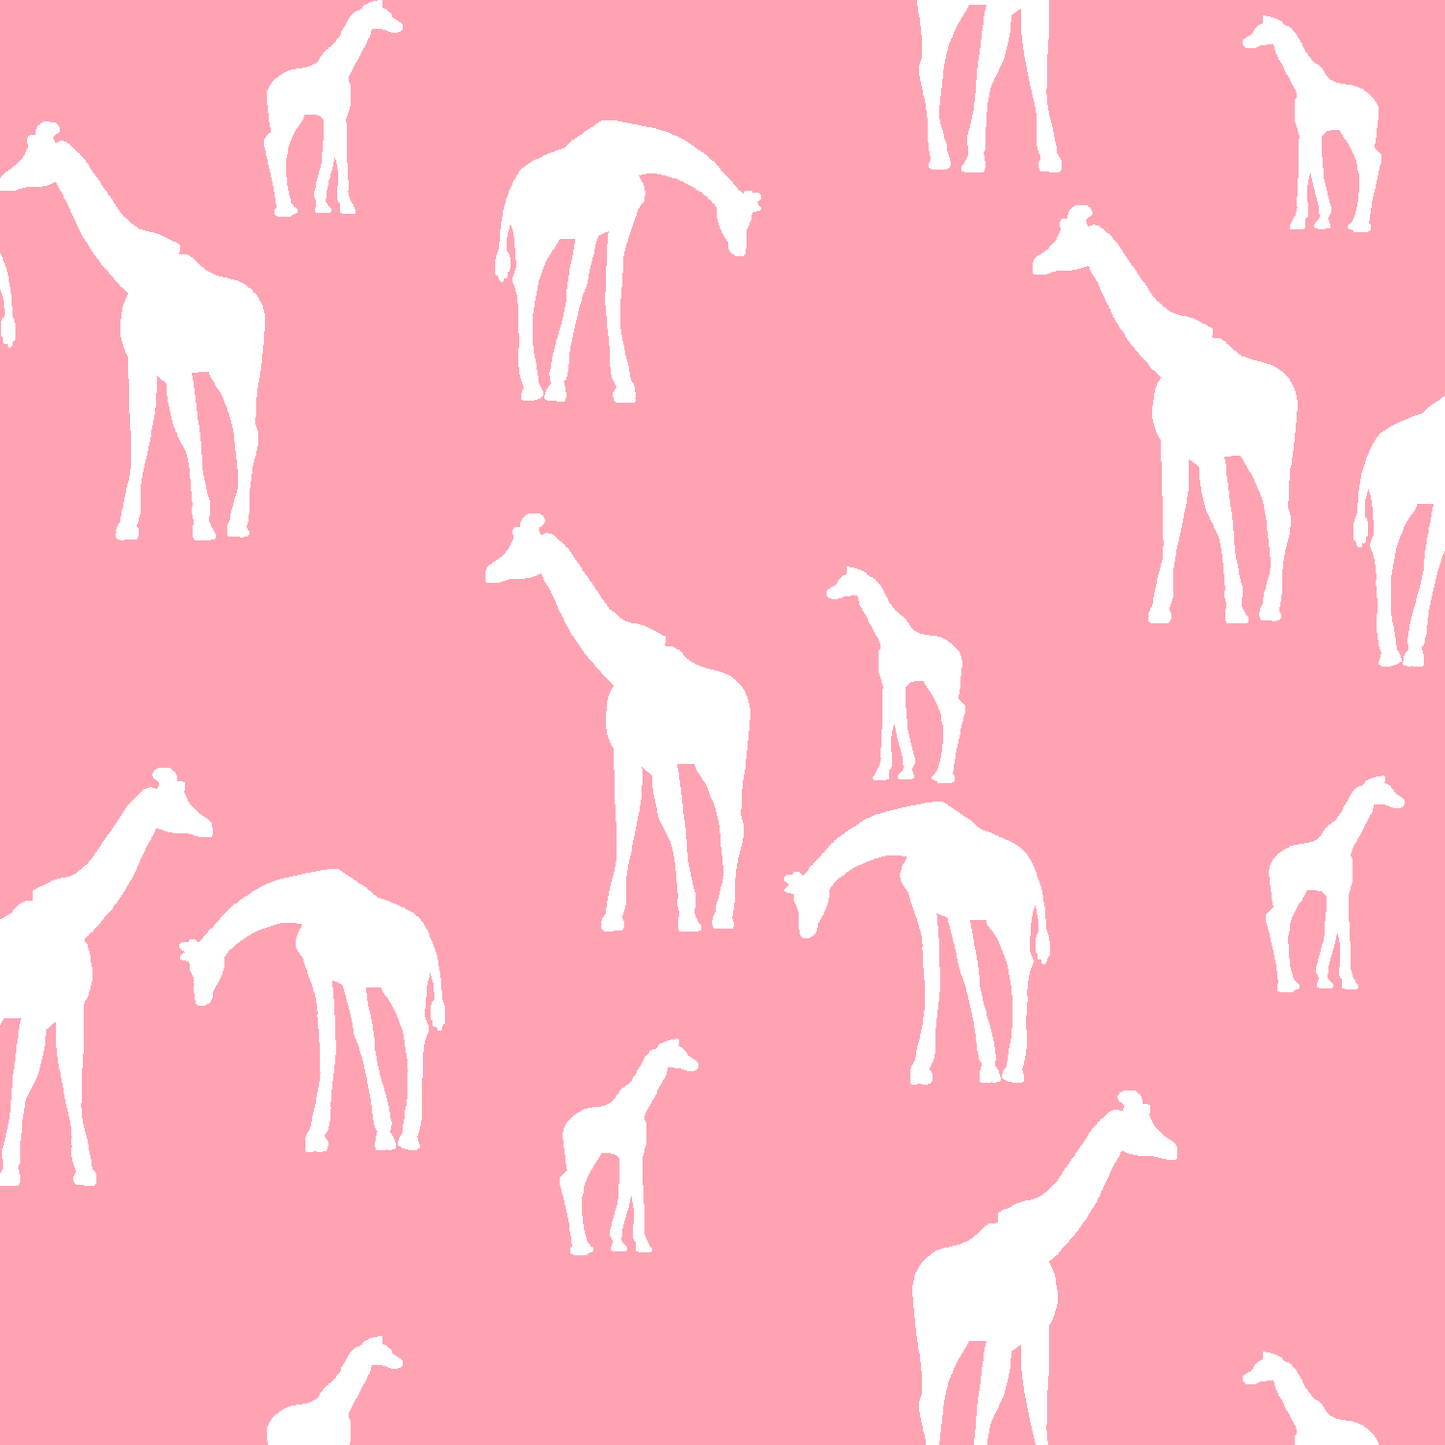 Giraffe Silhouette in Rose Pink